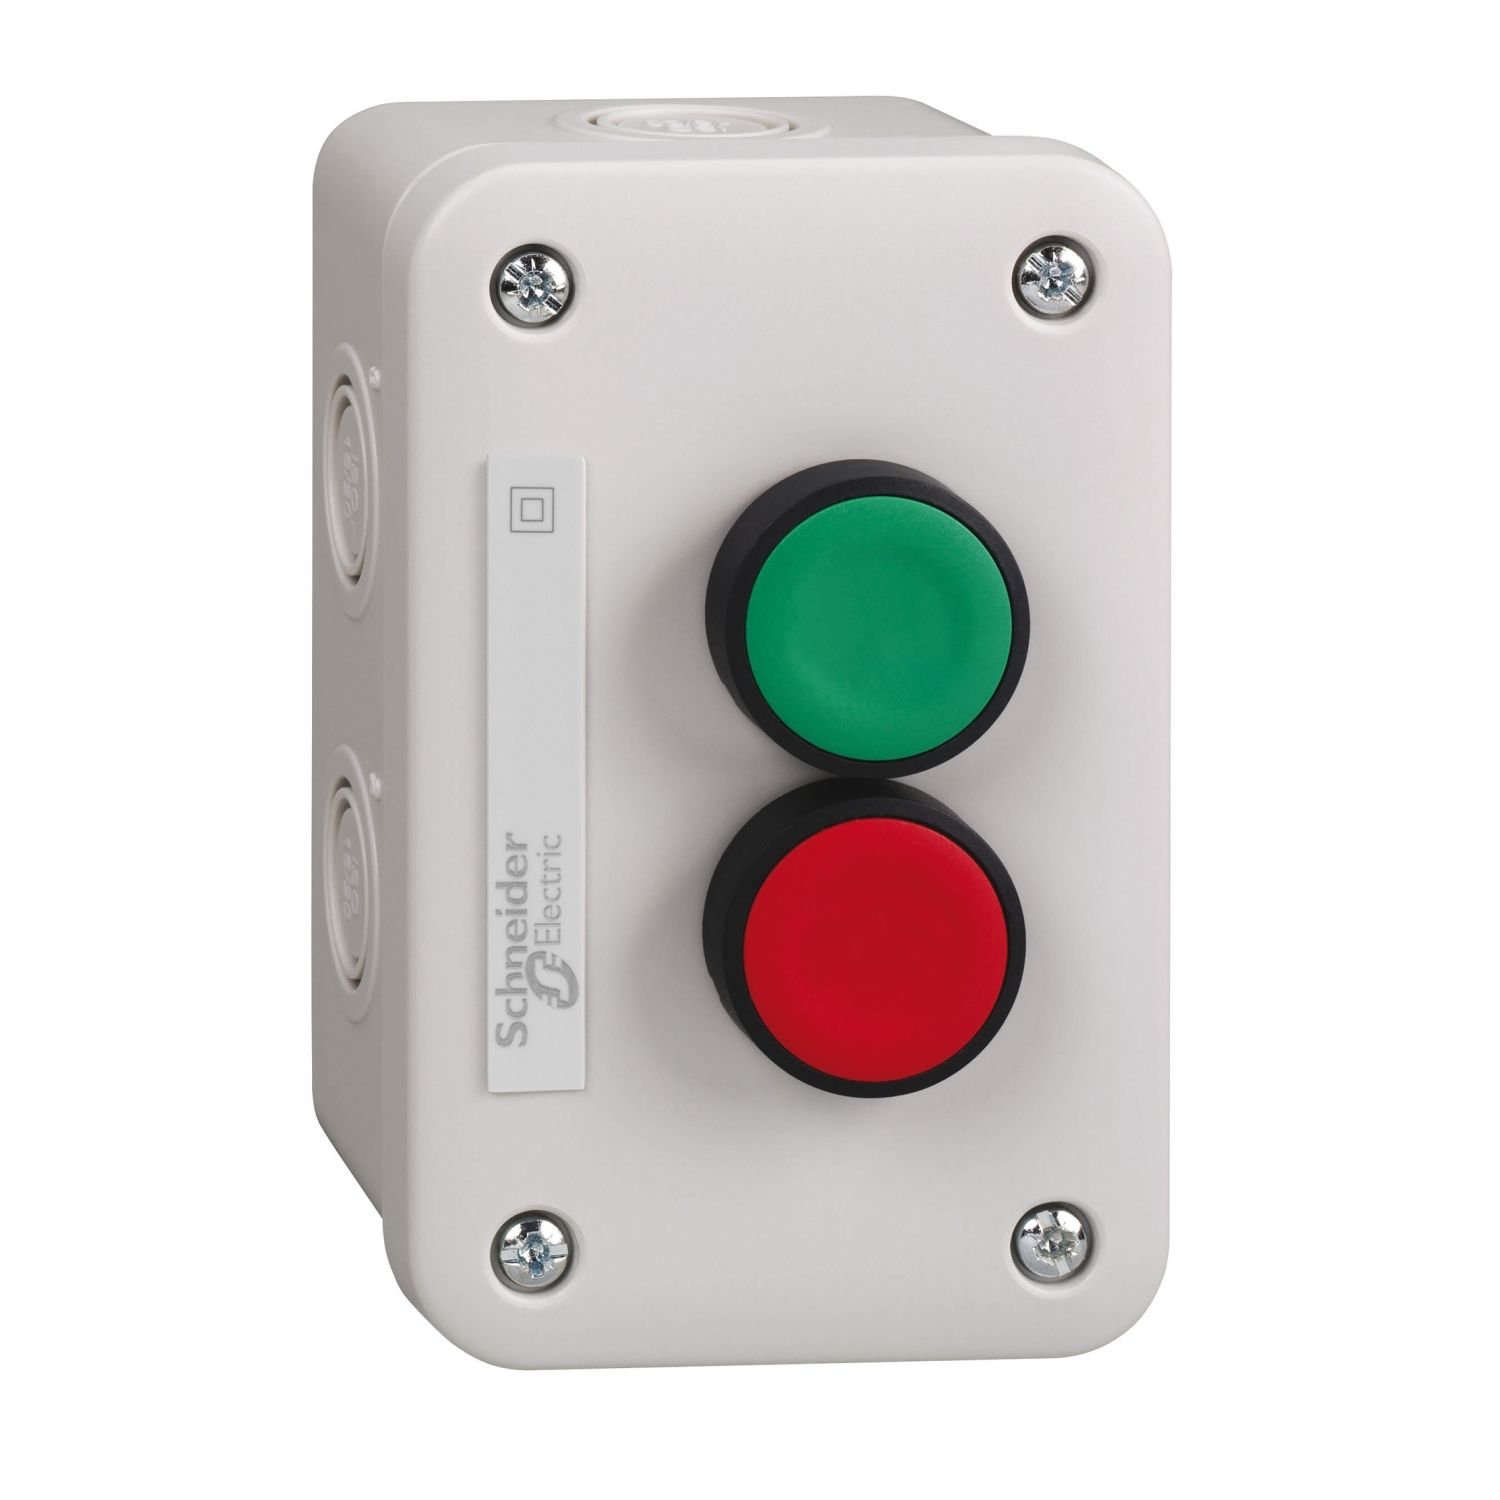 XALE2011 control station XAL-E - green pushbutton 1 NO + red pushbutton 1 NC